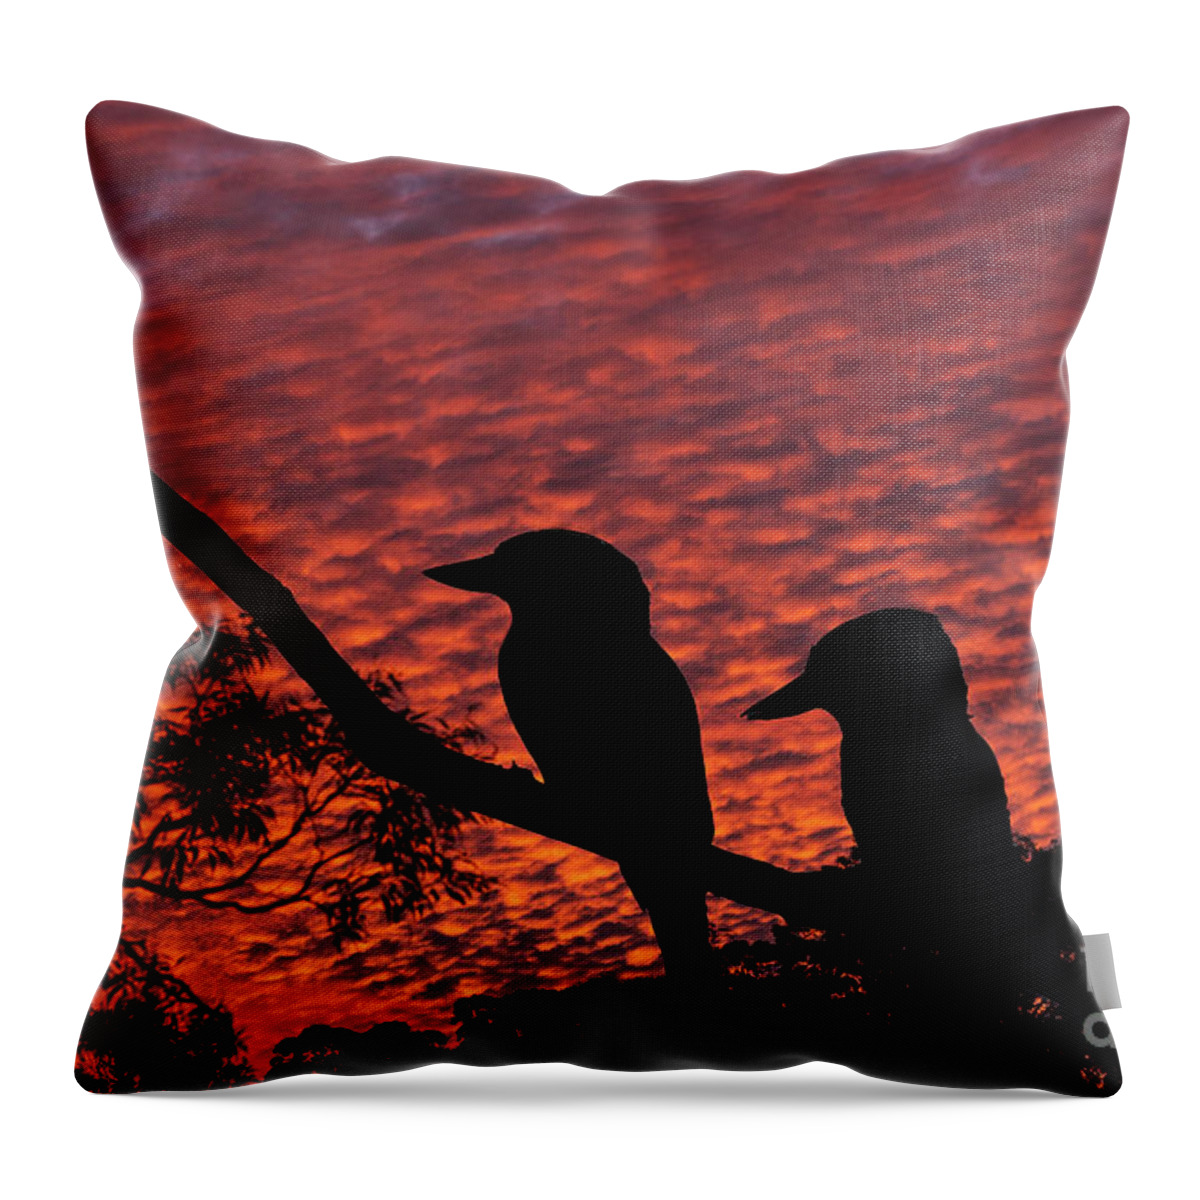 Kookaburras Throw Pillow featuring the photograph Kookaburras at sunset by Sheila Smart Fine Art Photography